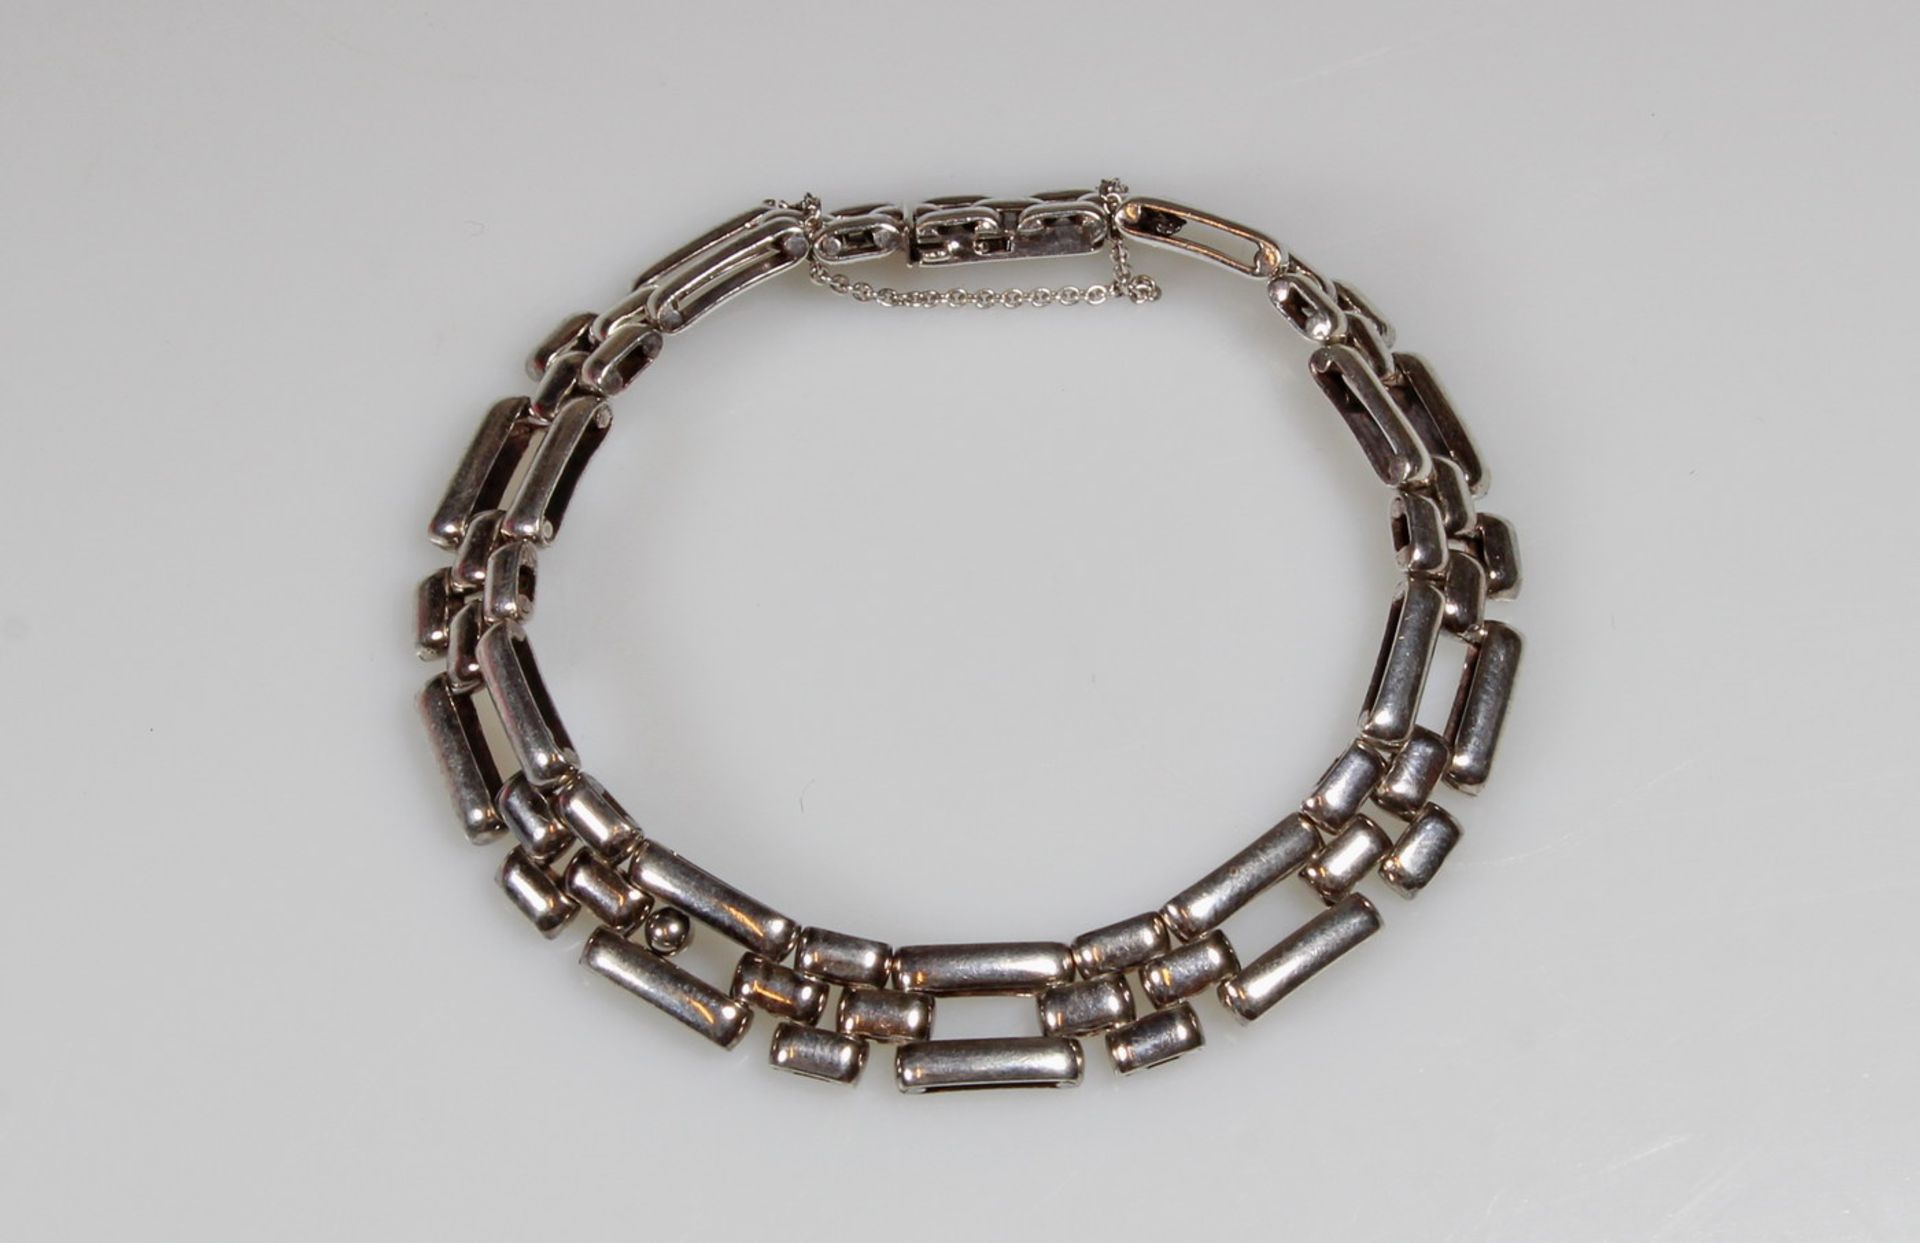 Armband, Silber 835, gepunzt KJ mit Pfeil, für Kollmar & Jourdan, Pforzheim, Art Deco, 1920er/30er